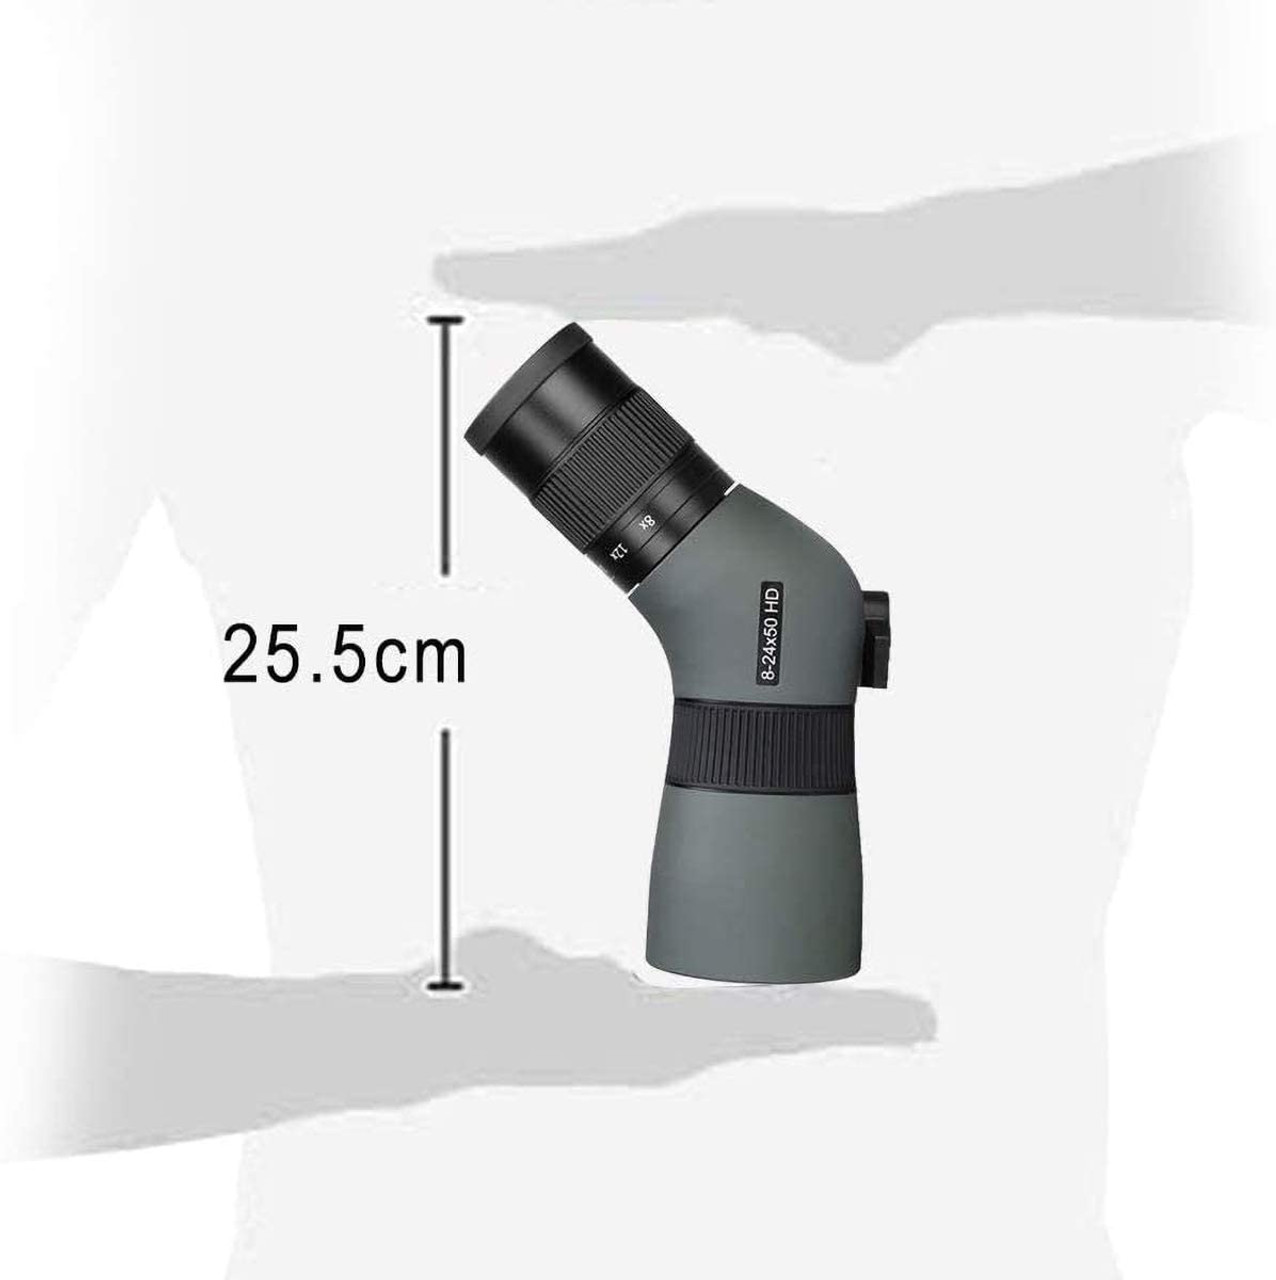 SVBONY SV410 Fieldscope Telescope High Magnification 8-24x50mm ED Lens FMC IPX5 Waterproof Compact Spottingscope